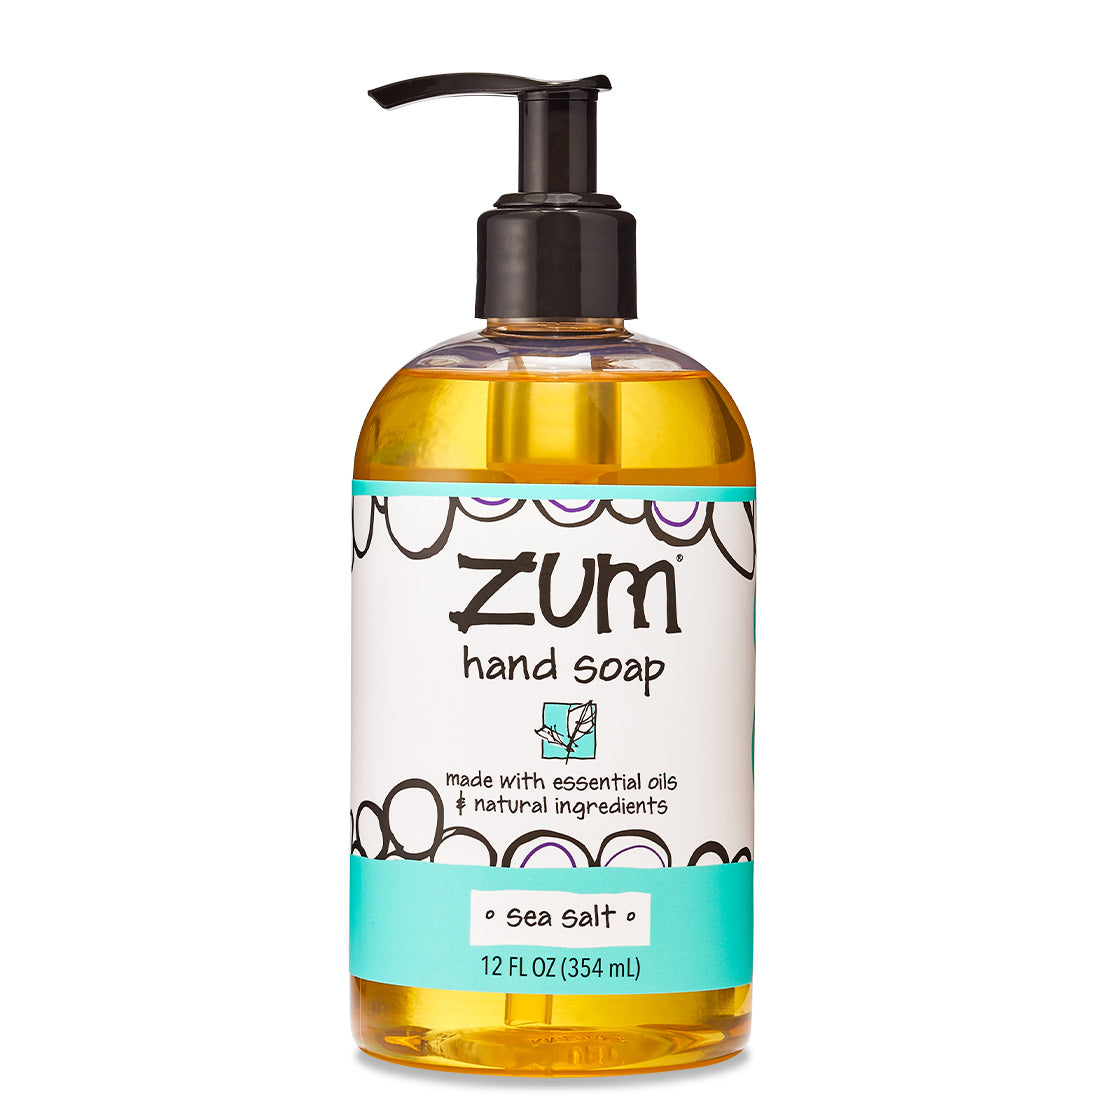 Zum Clean Laundry Soap, Aromatherapy, Sea Salt - 64 fl oz